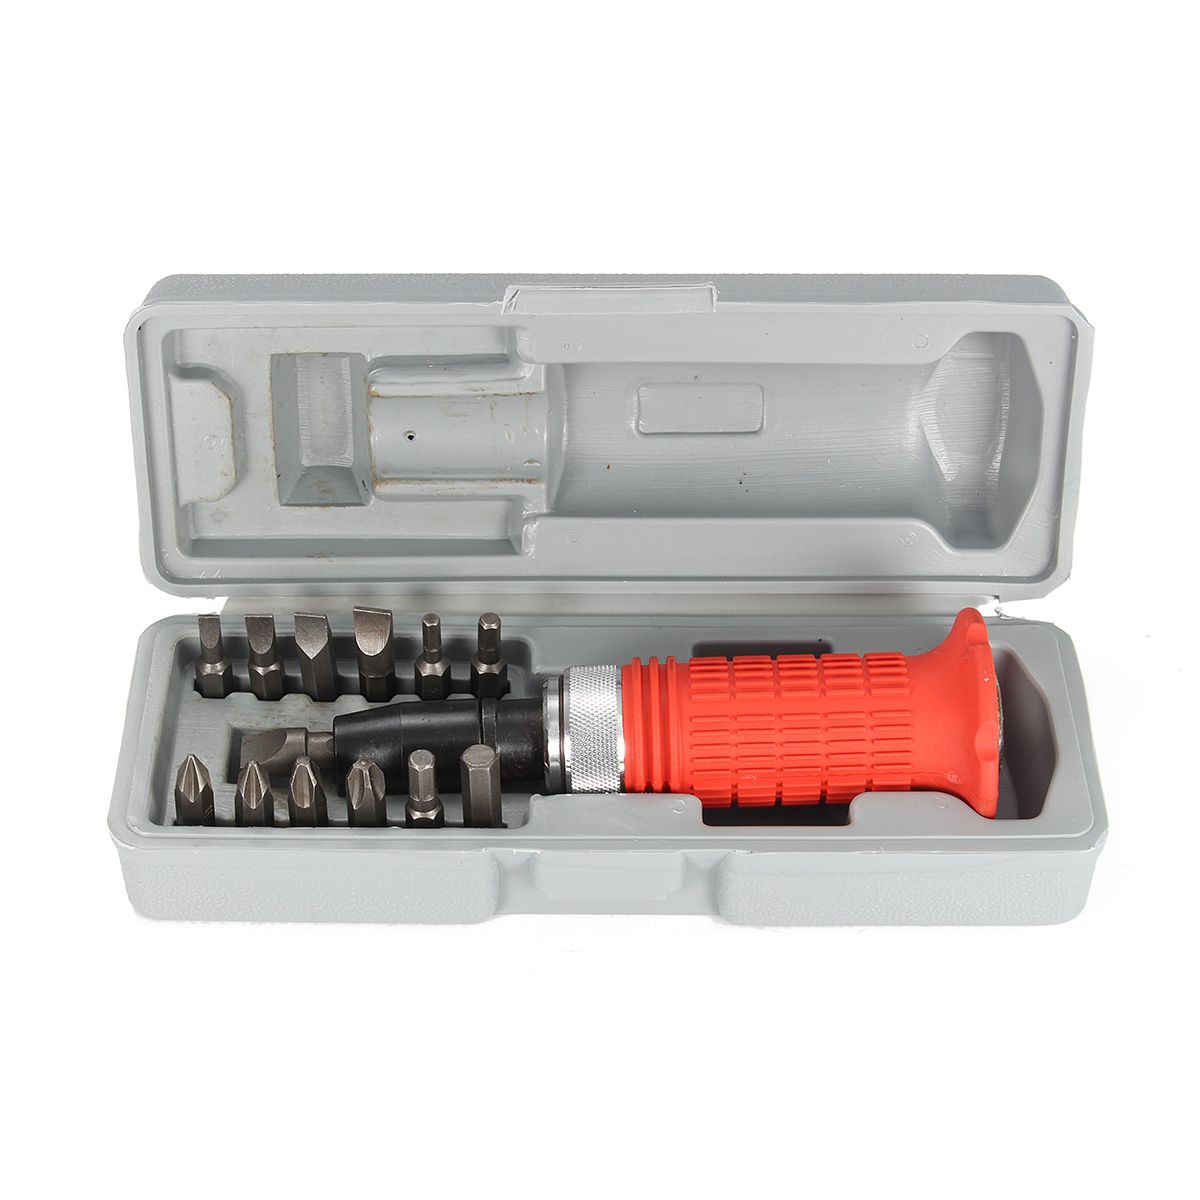 Multi-Purpose-Heavy-Duty-Impact-Screwdriver-Set-Driver-Chisel-Bits-Tools-Socket-Kit-with-Case-1260705